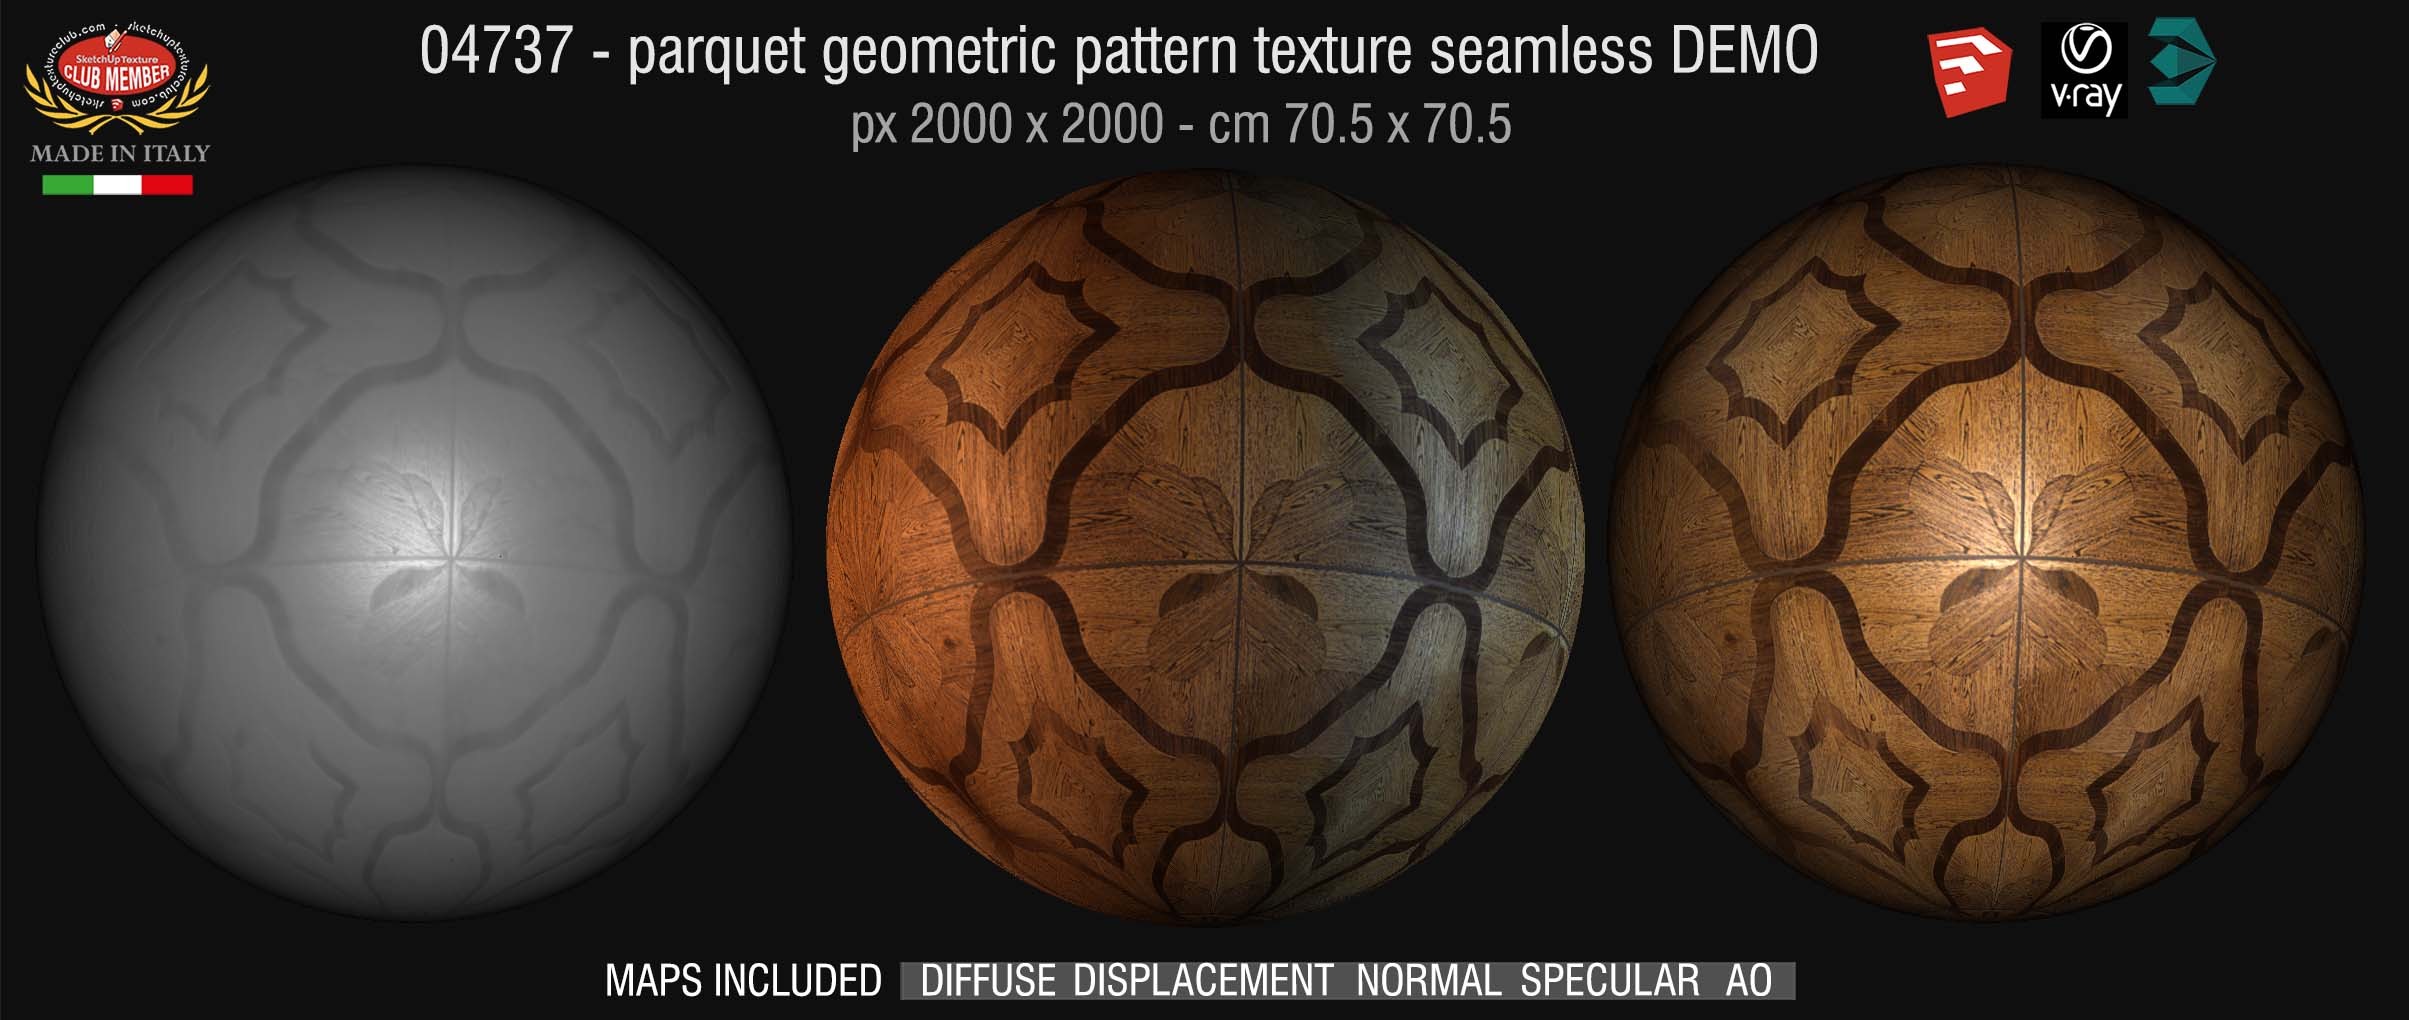 04737 HR Parquet geometric pattern texture seamless + maps DEMO